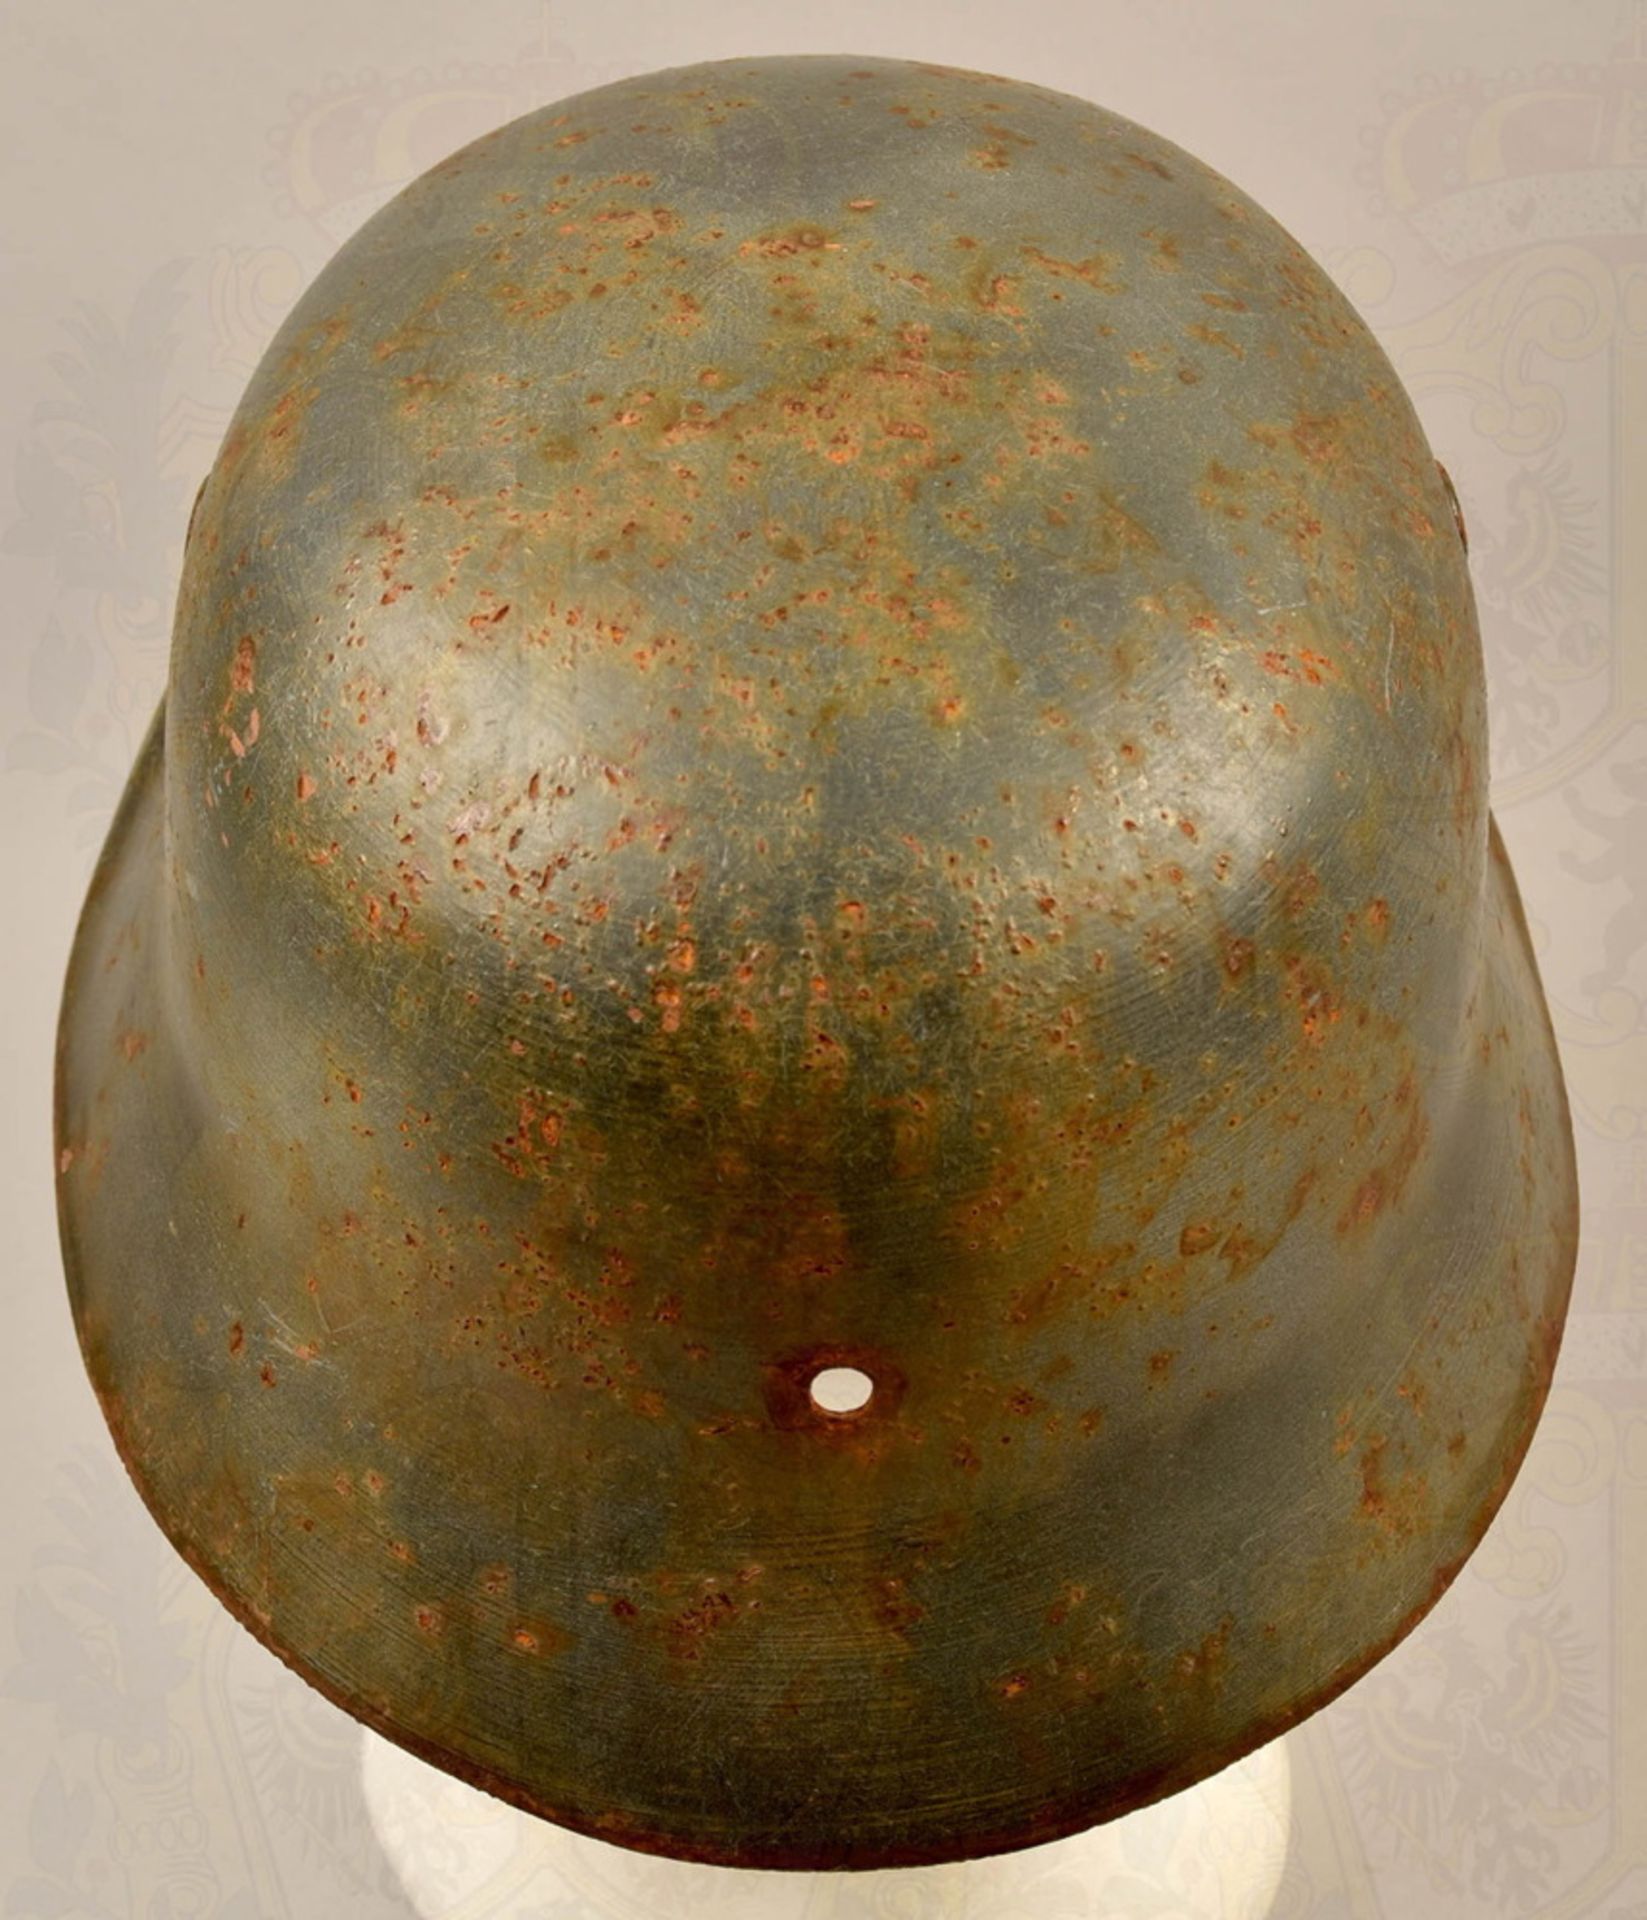 Steel helmet pattern 35/40 for Red Cross personnel - Image 4 of 10